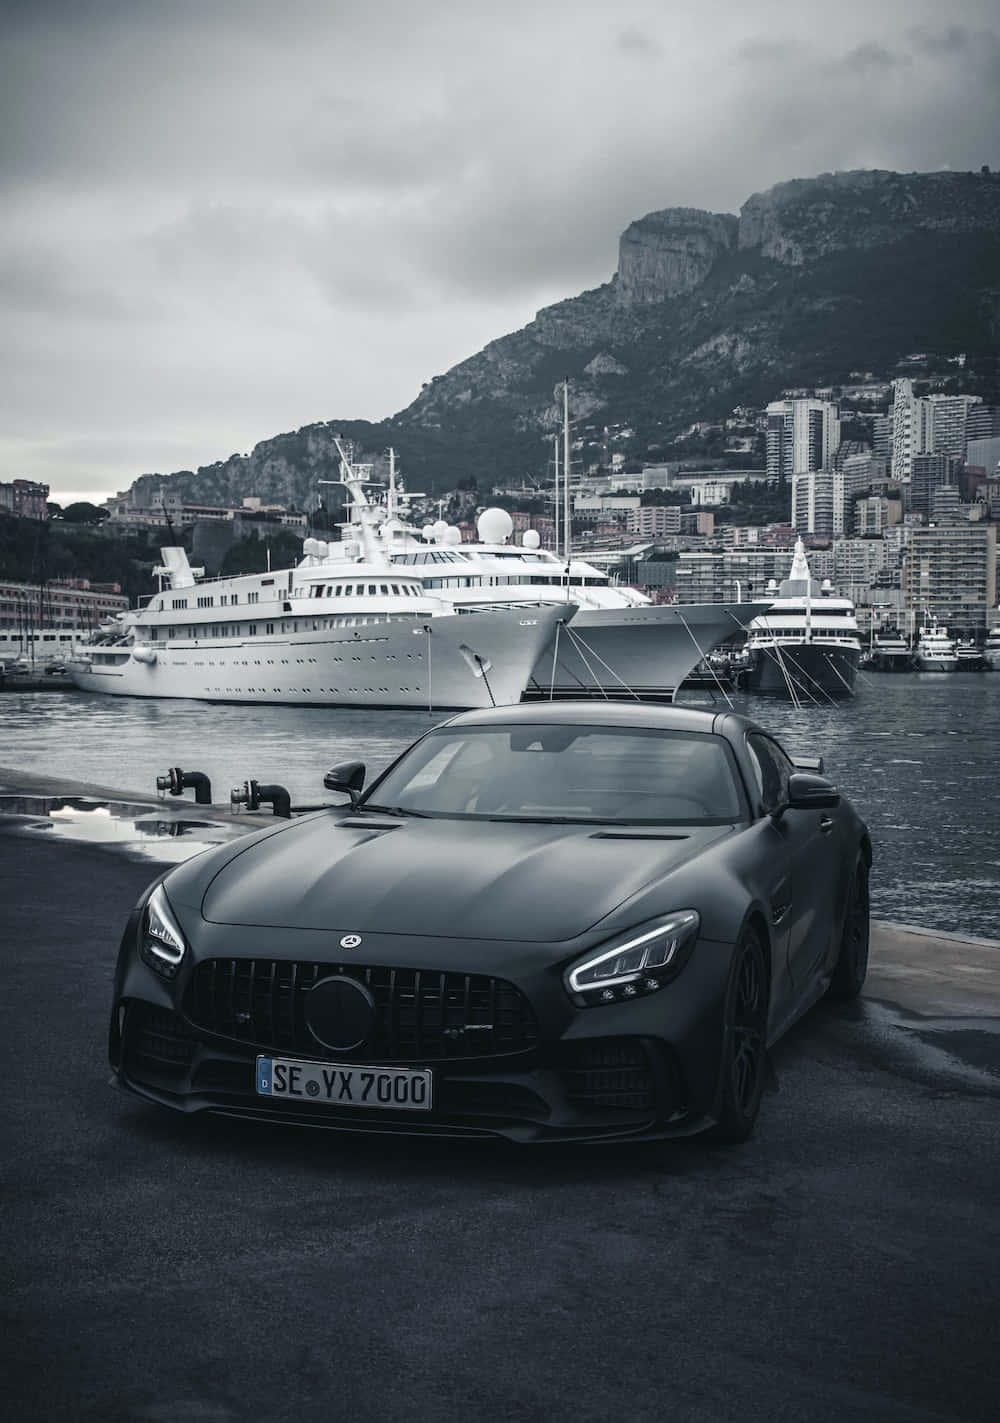 Migliorsfondo Mercedes Black Amg Gt Accanto A Un Molo.